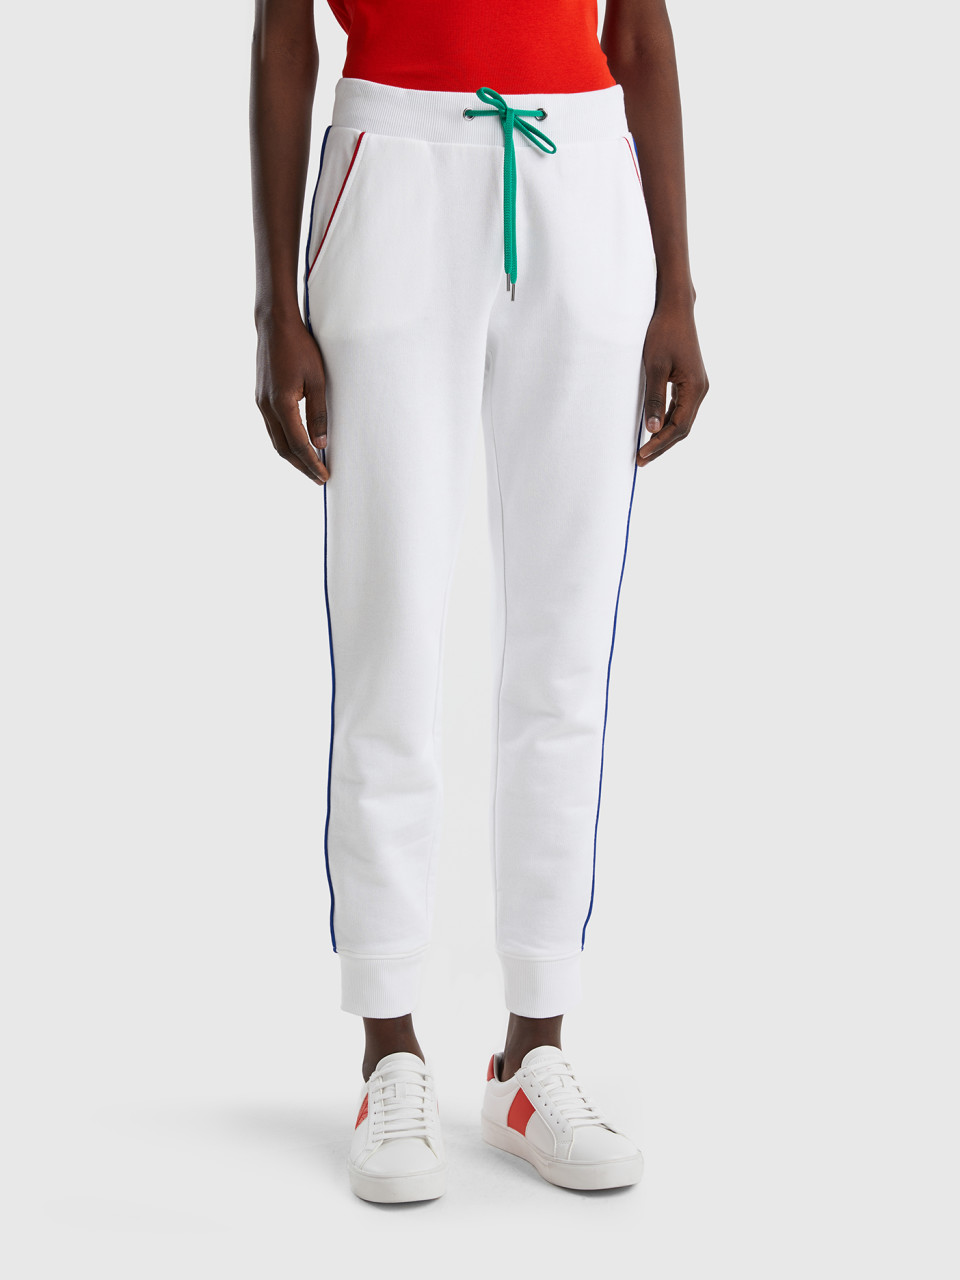 Benetton, Sweatpants With Drawstring, White, Women